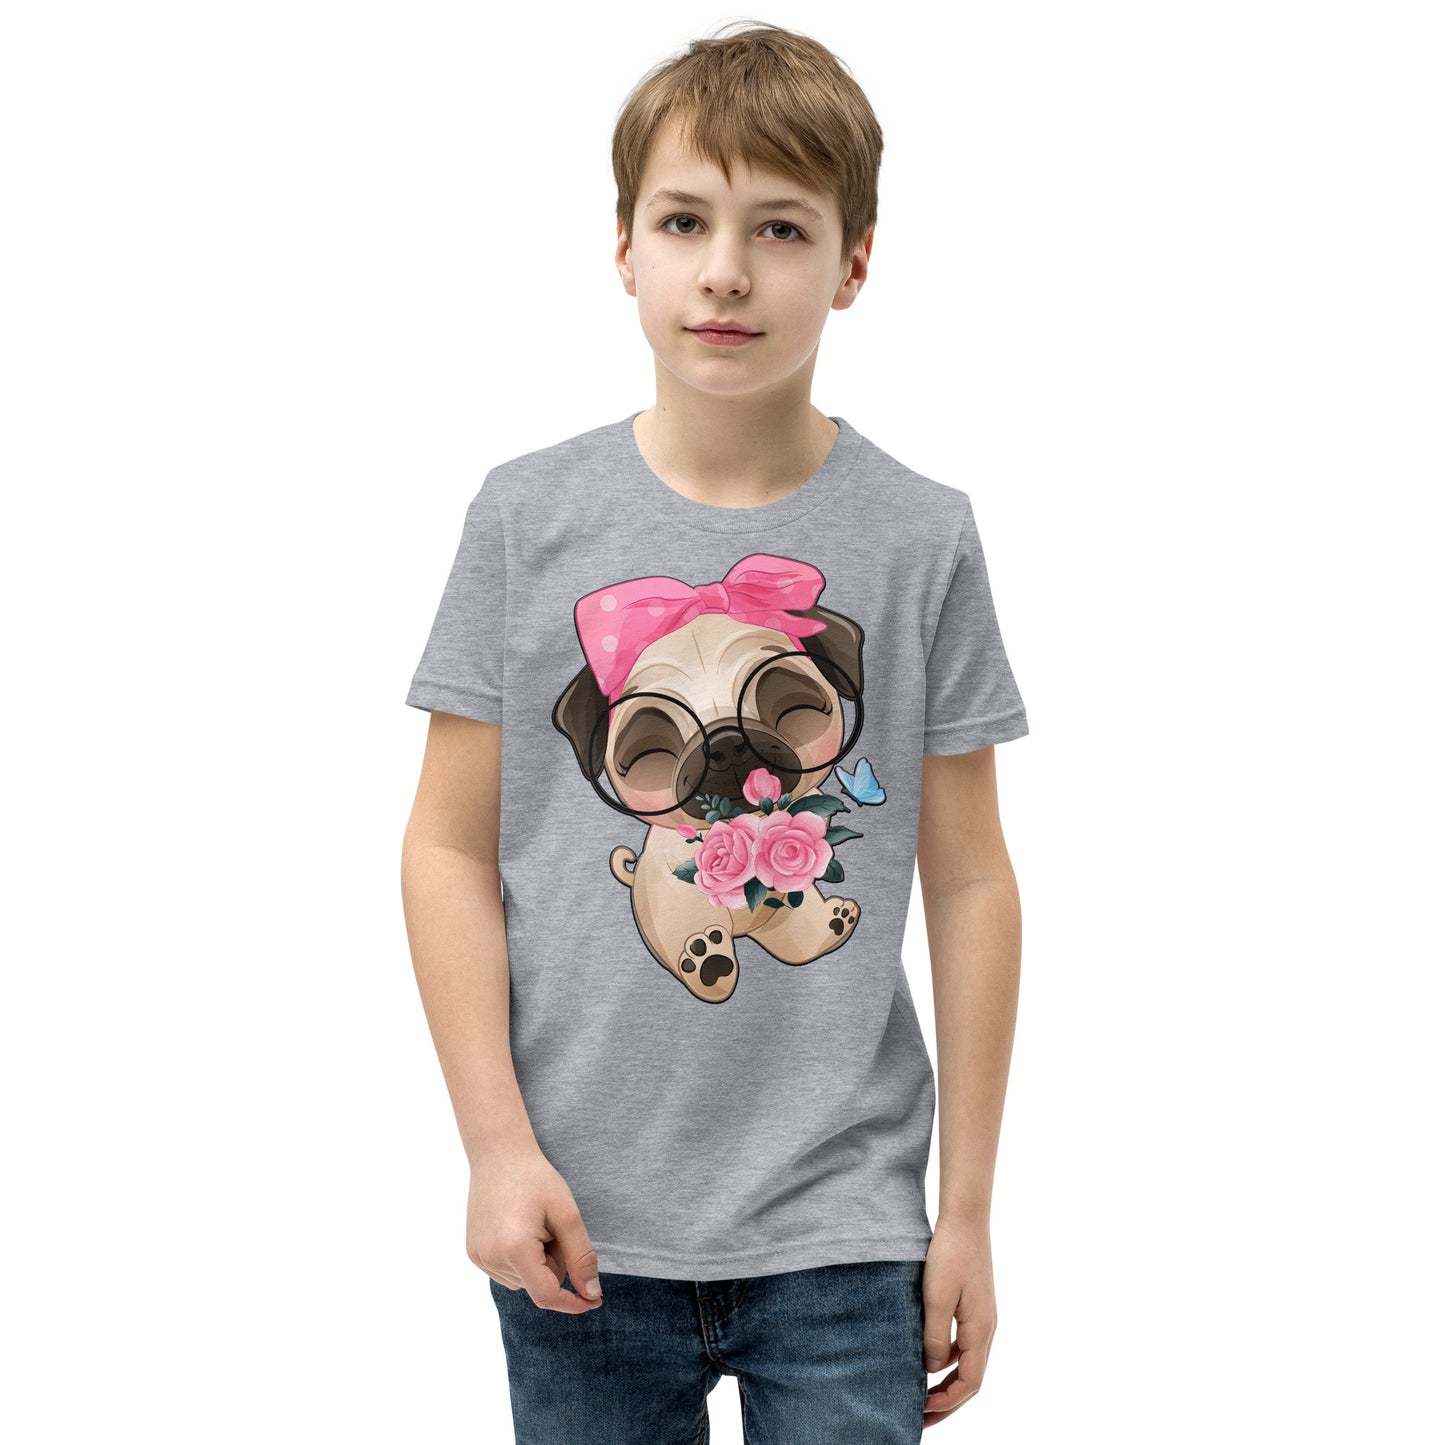 Cute Little Pug Dog Holding Roses T-shirt, No. 0362